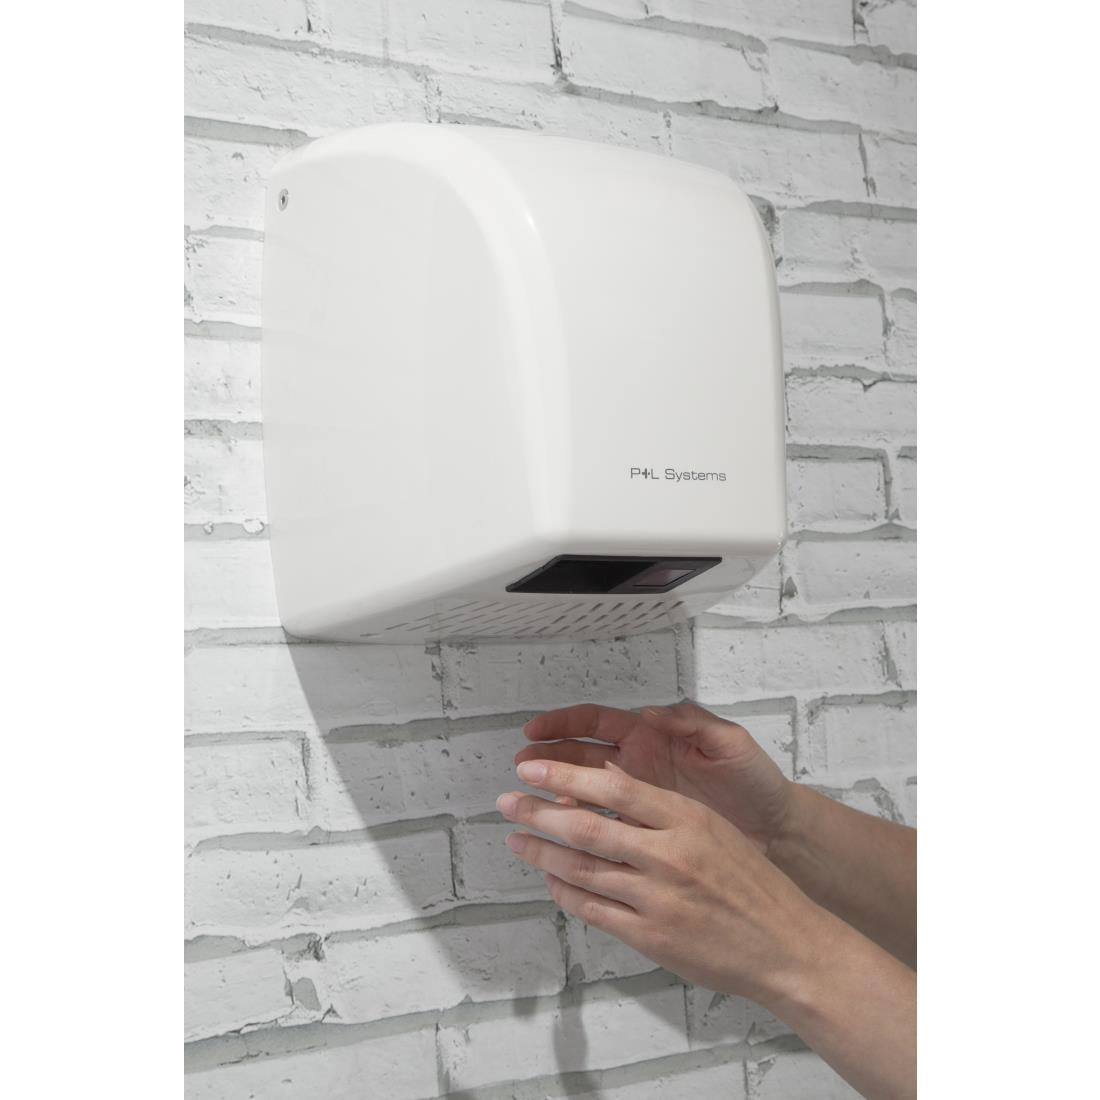 T-series 2100 Hand Dryer